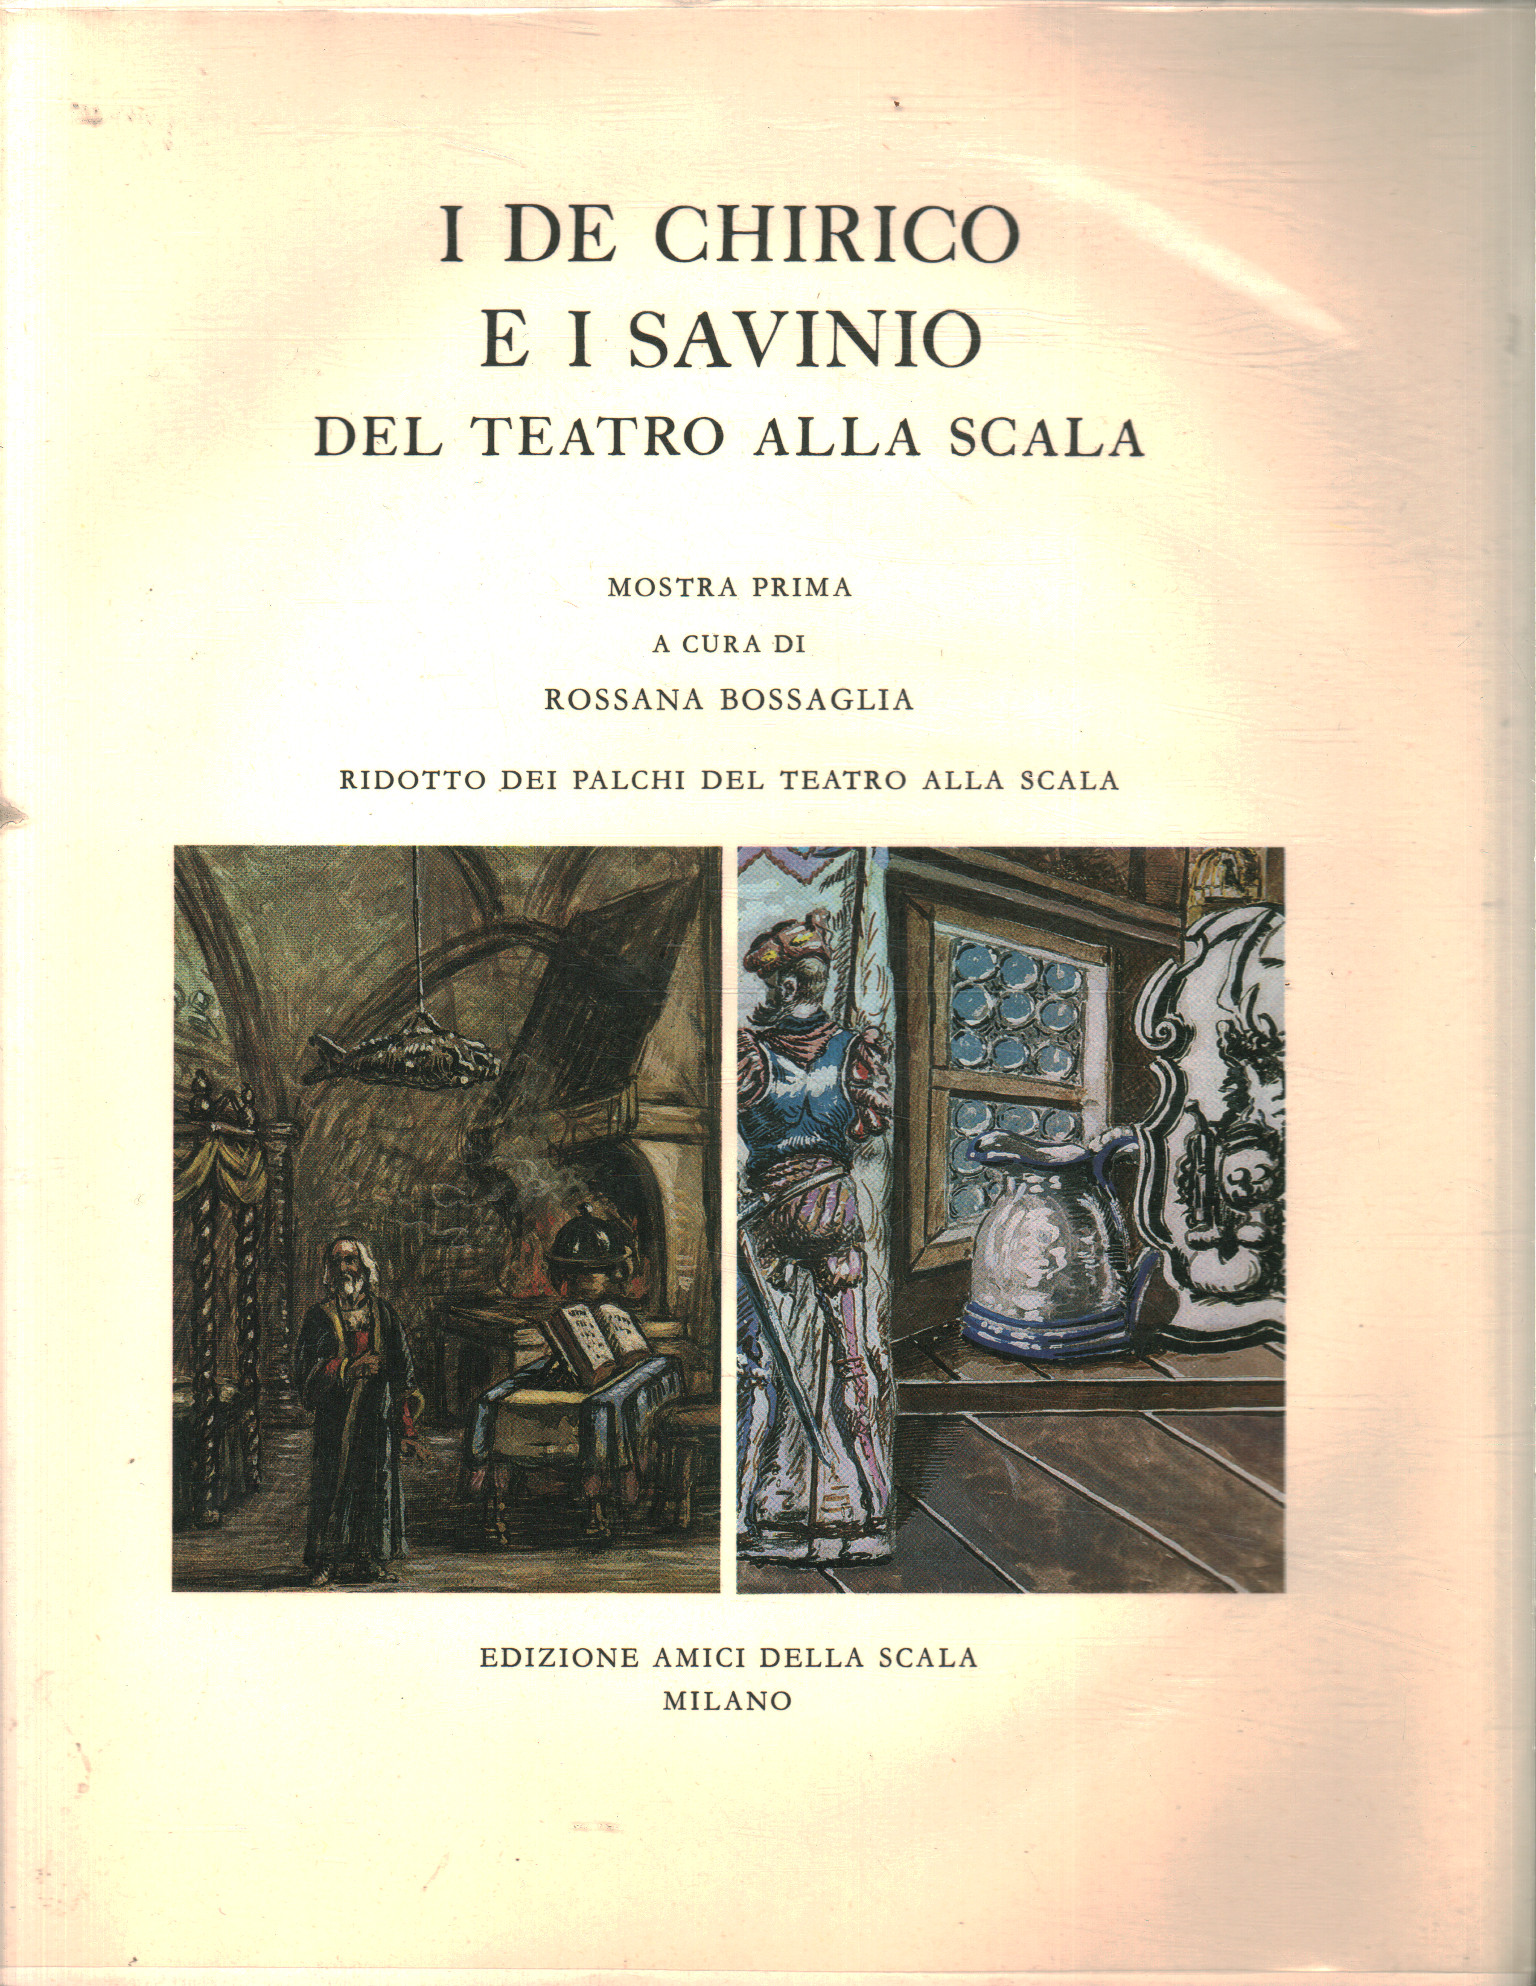 I De Chirico und Savinio del Teatro%, I De Chirico und Savinio del Teatro%